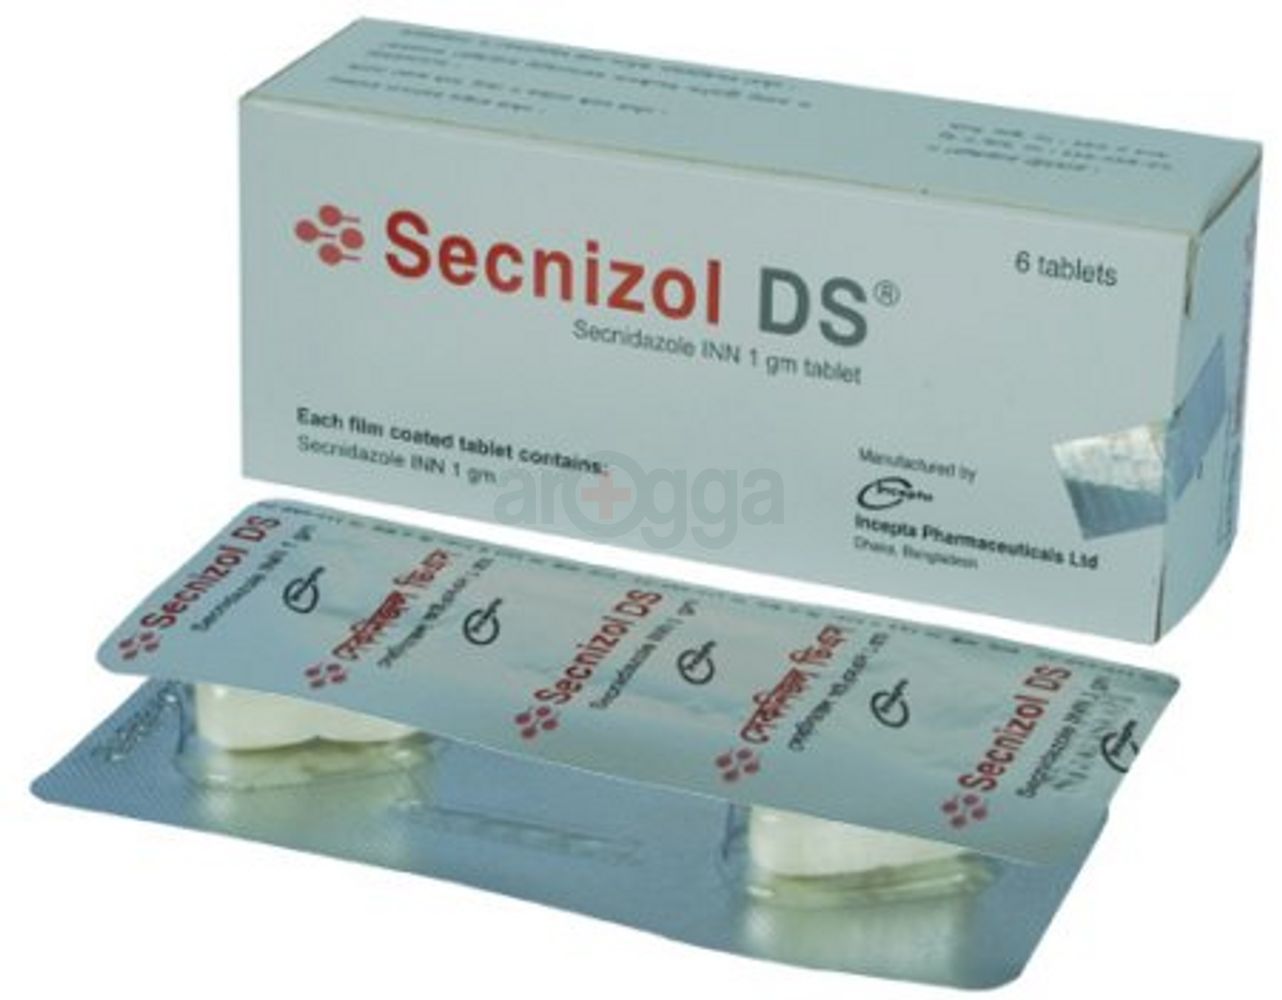 Secnizol DS